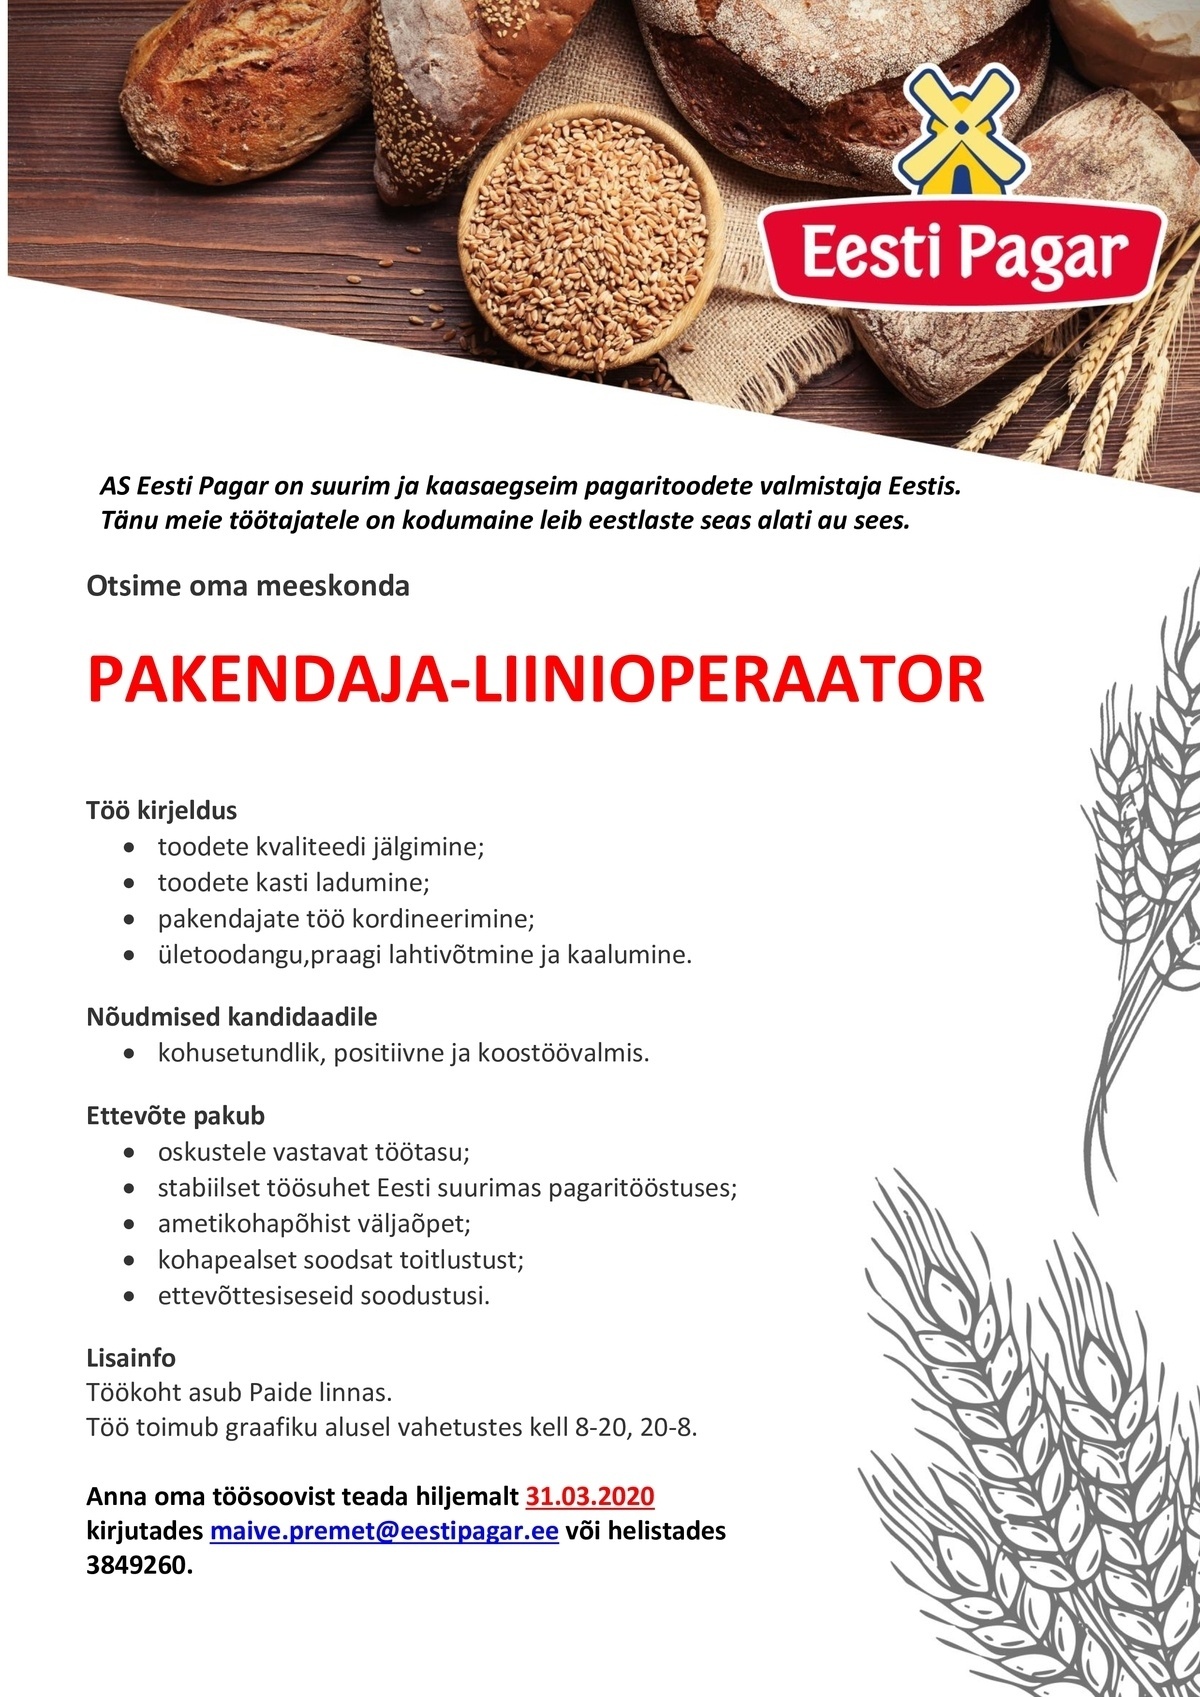 Eesti Pagar AS Pakendaja-liinioperaator